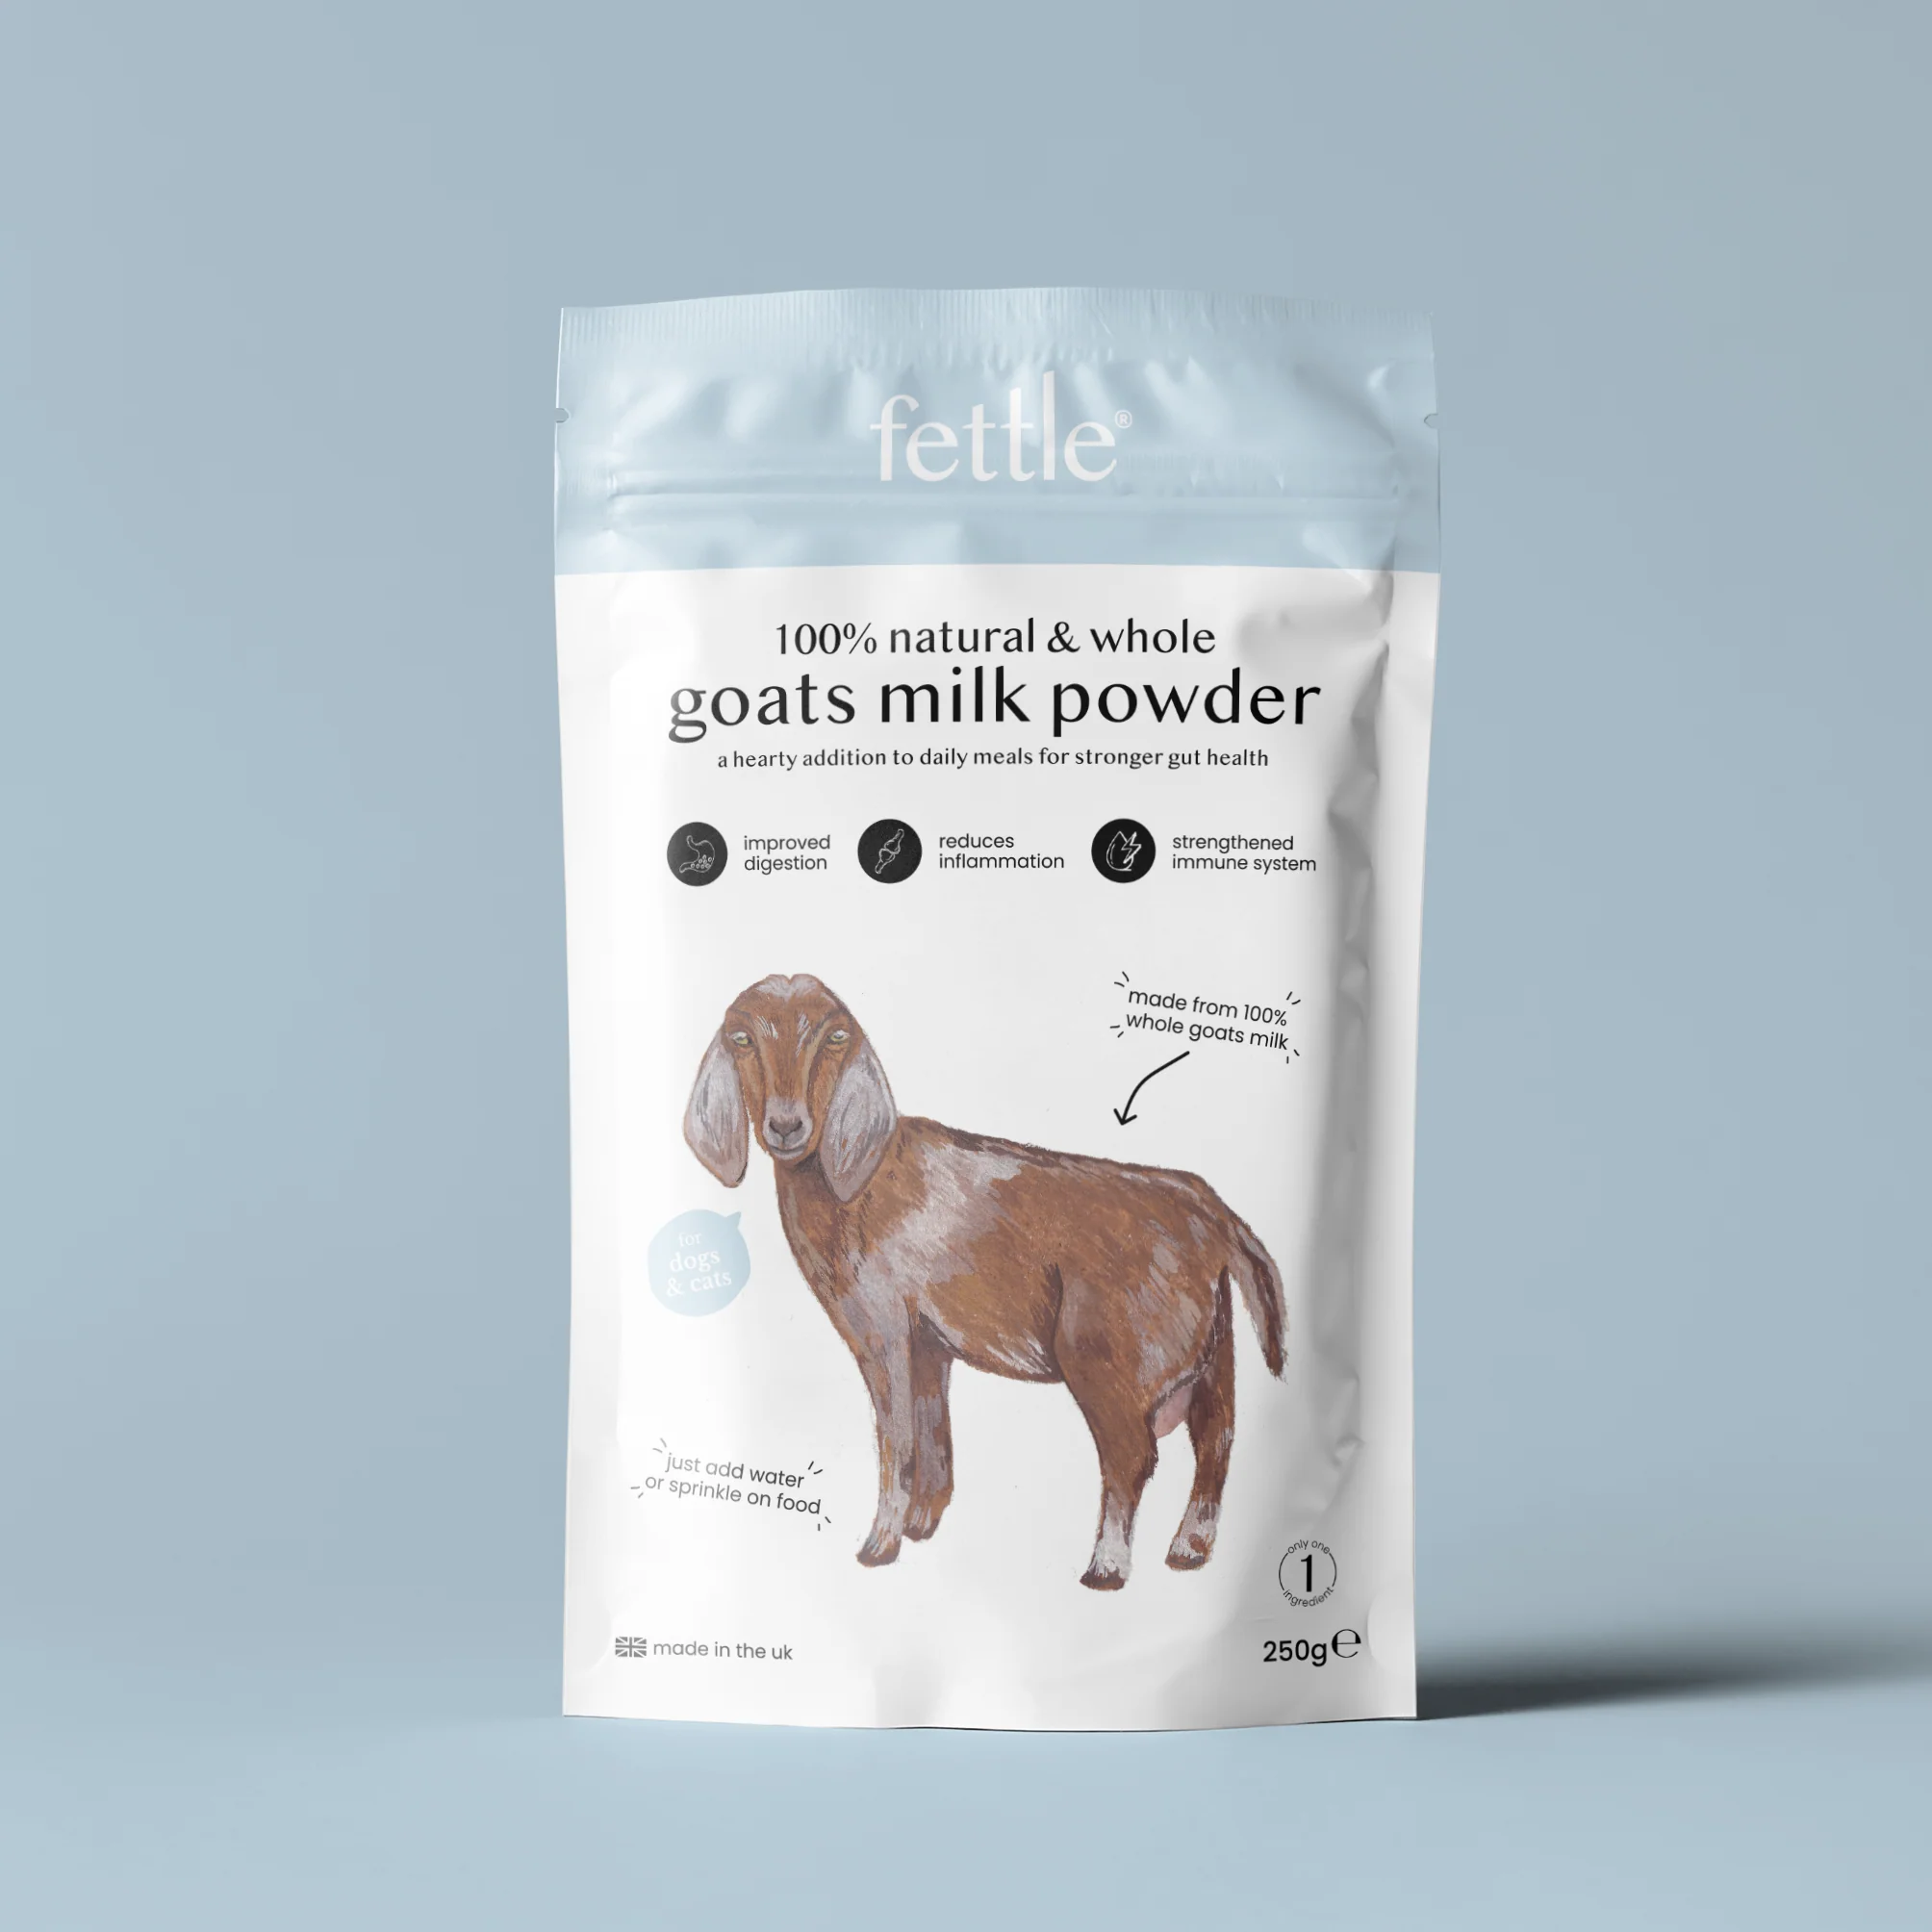 Fettle 100% Natural & Whole Goats Milk Powder 250g